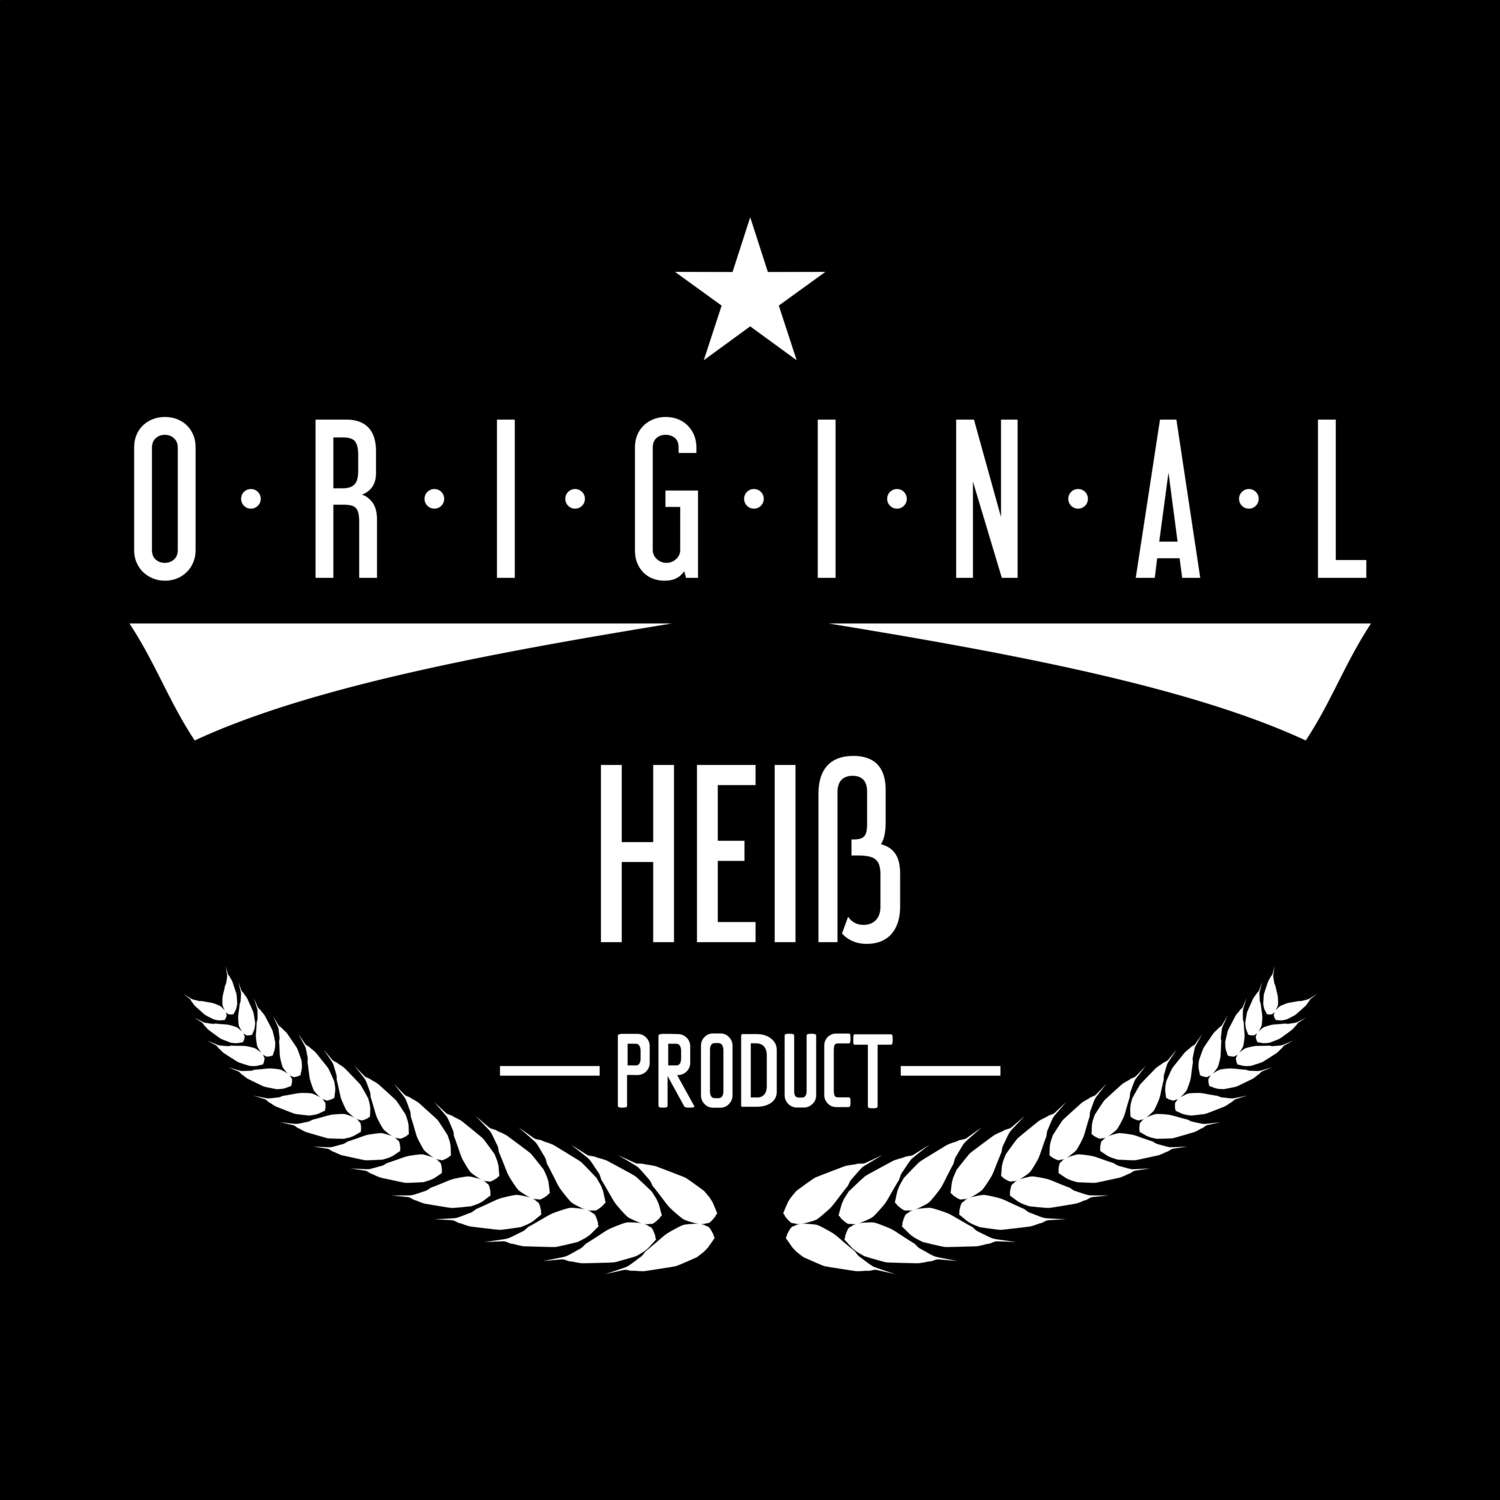 Heiß T-Shirt »Original Product«